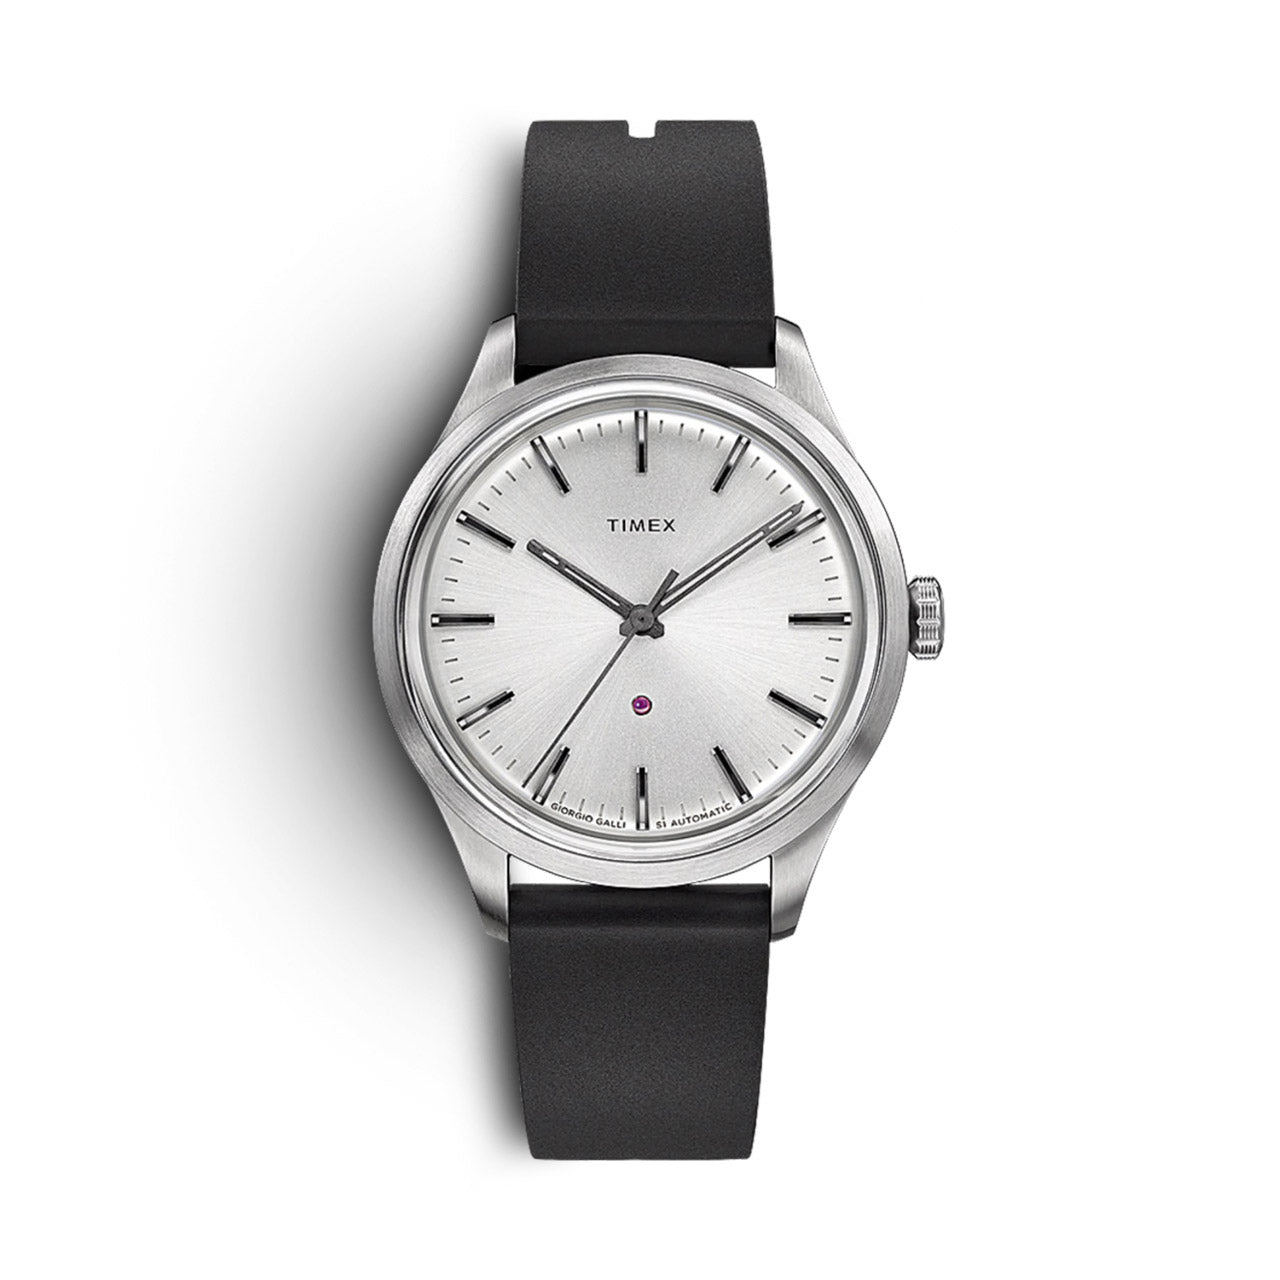 Автоматические часы Timex Giorgio Galli S1